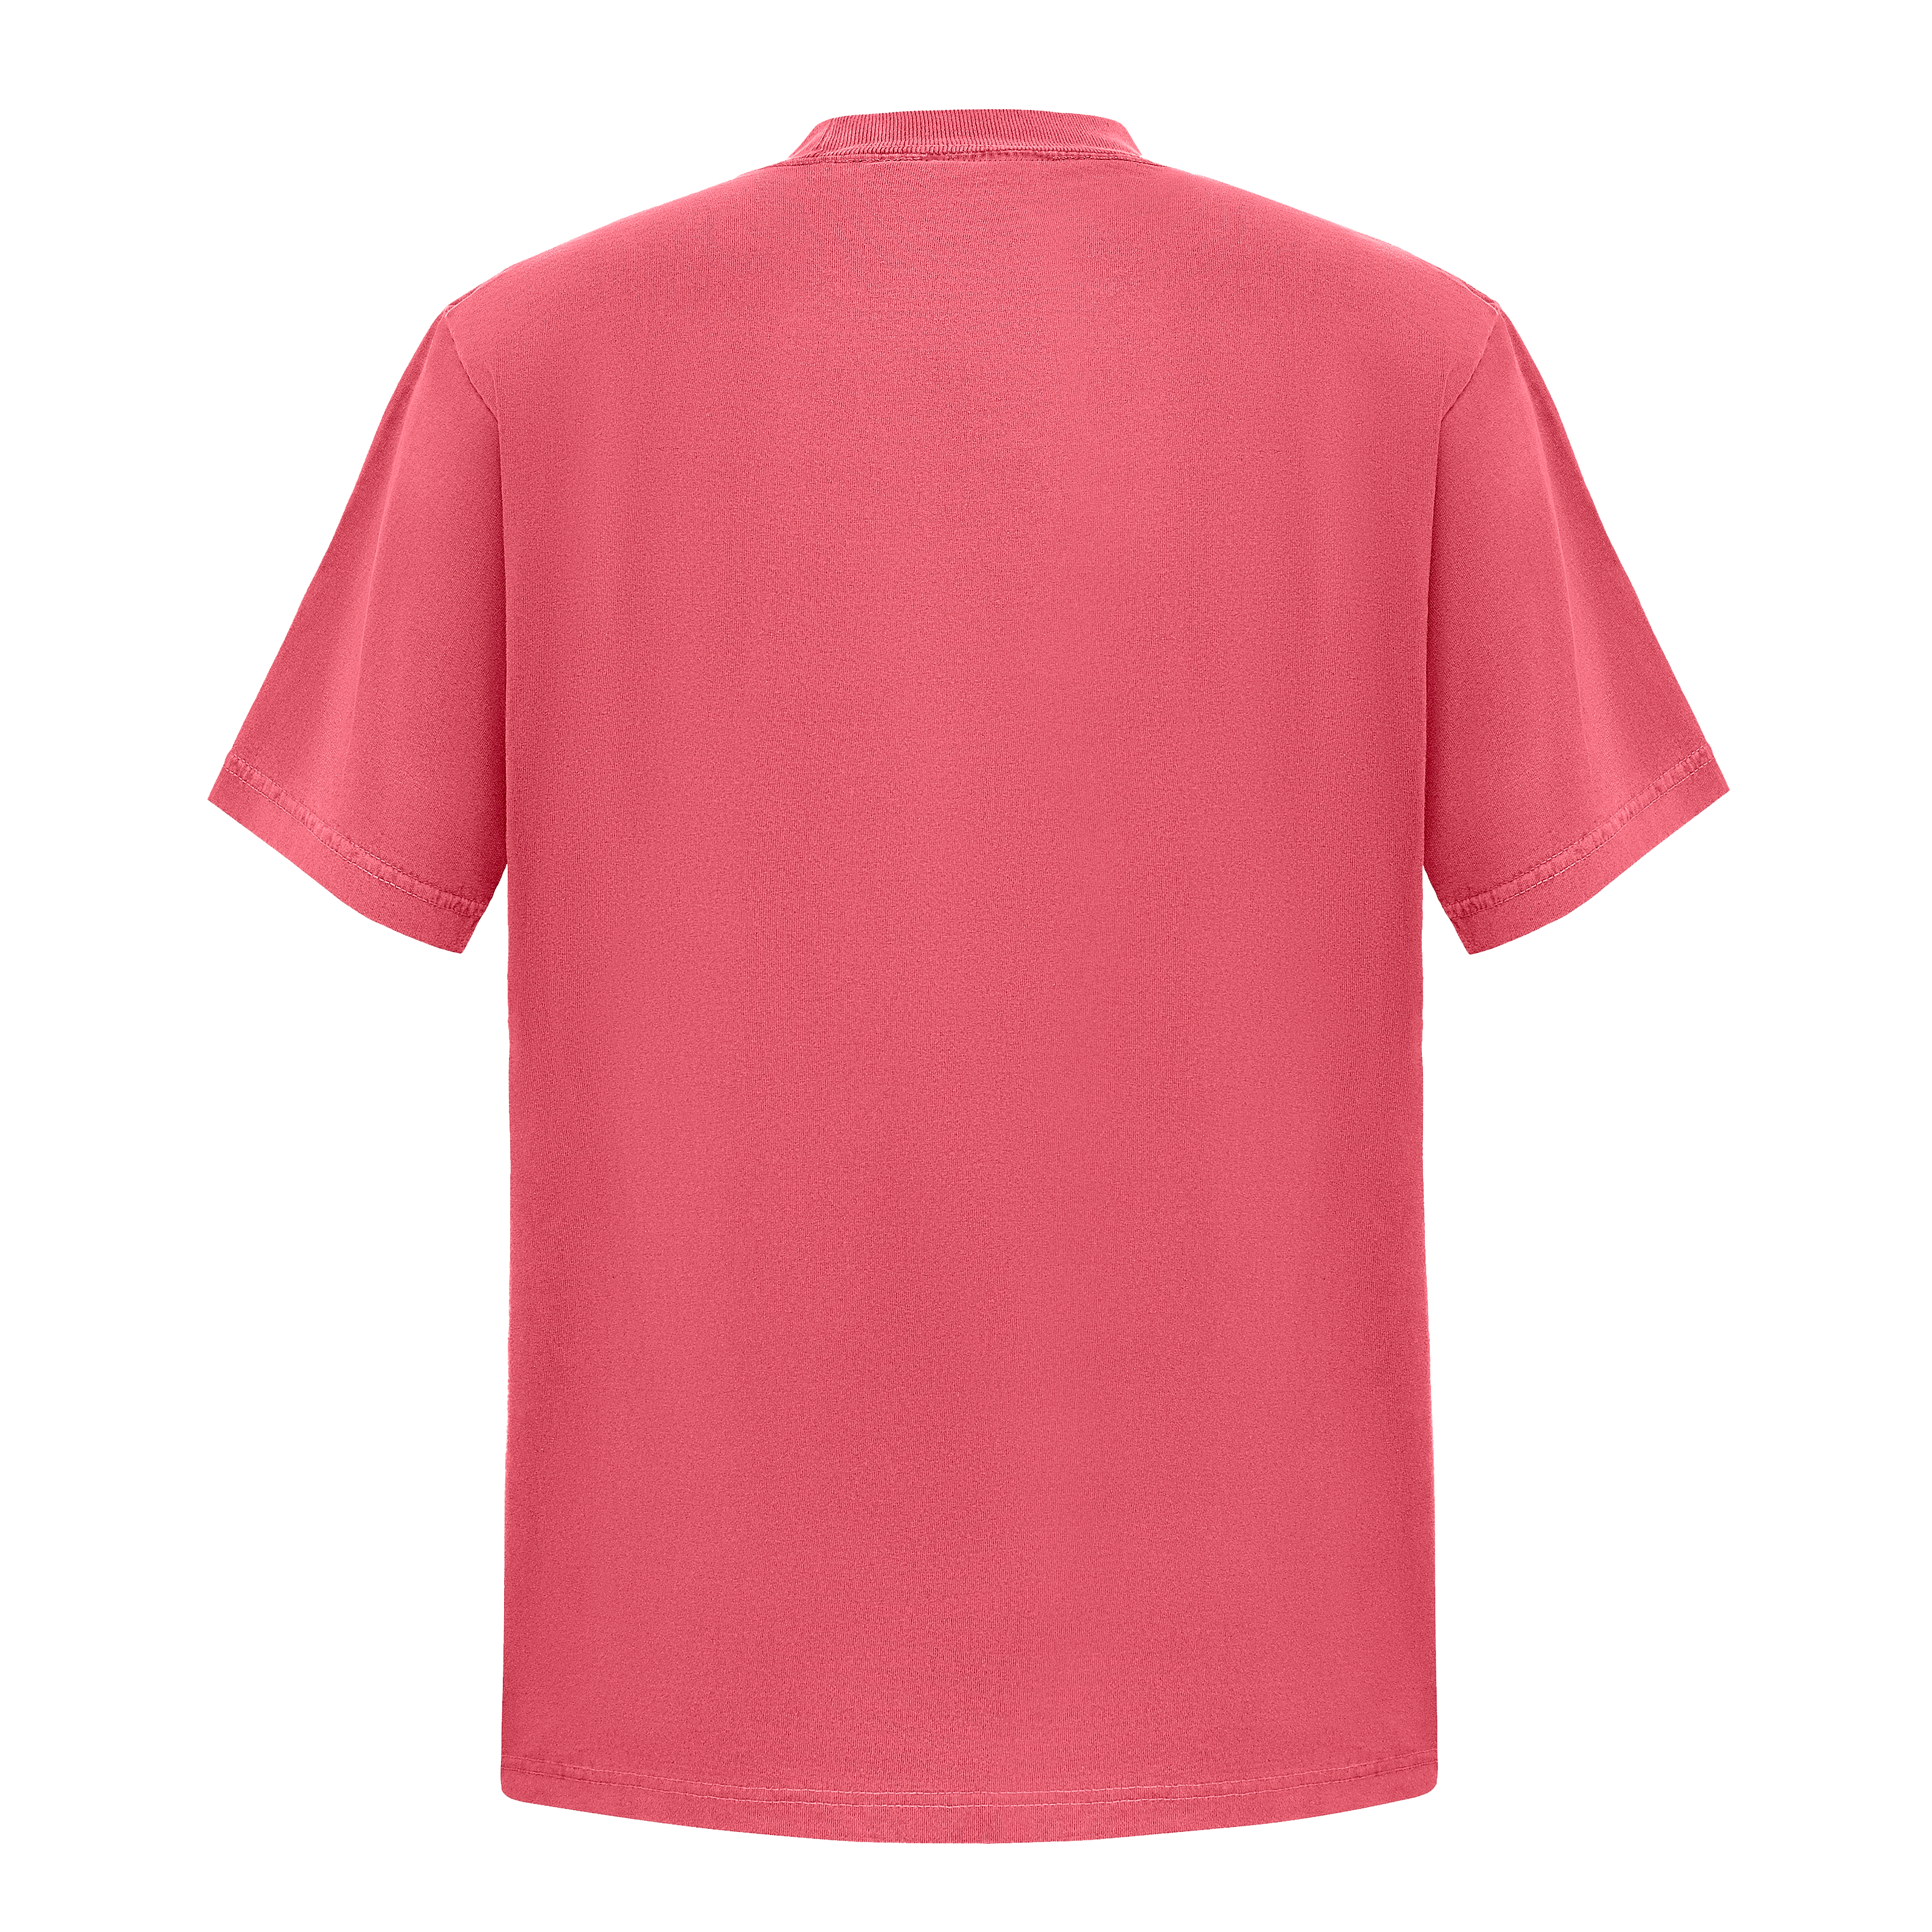 Garment Dye T-Shirt - Standard Size - Clay Red